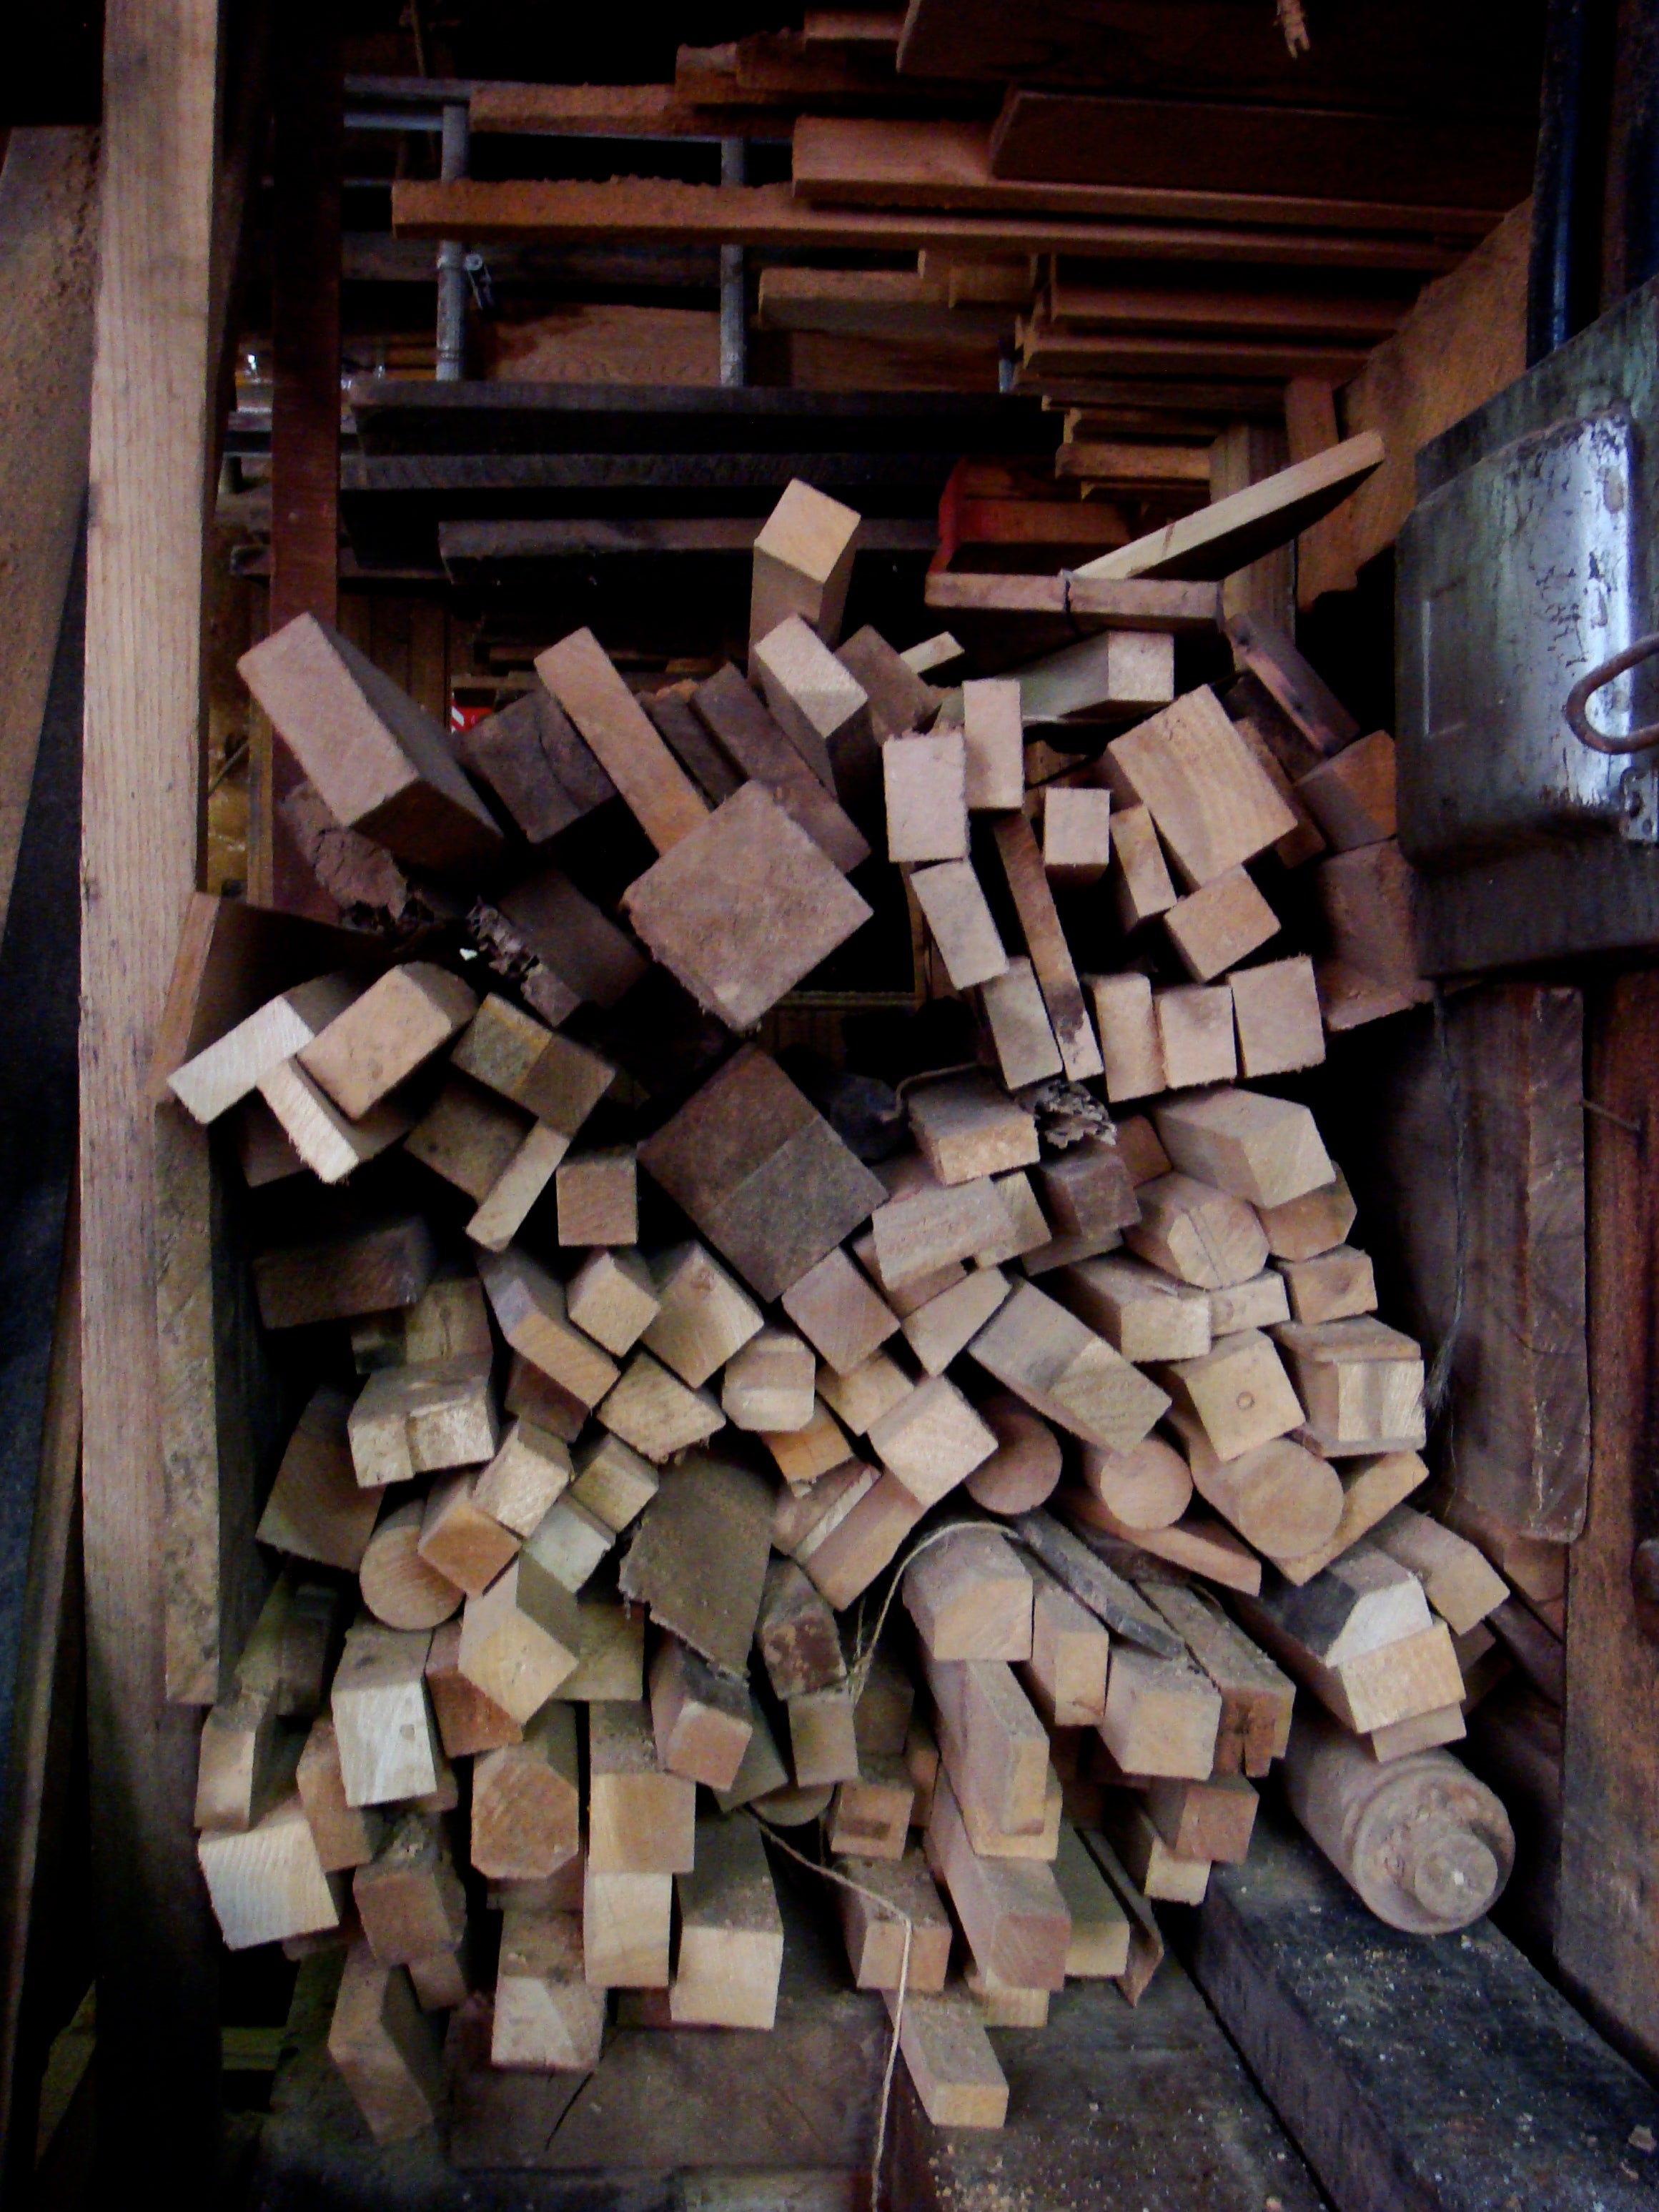 Inside John Grass: Wood in waiting